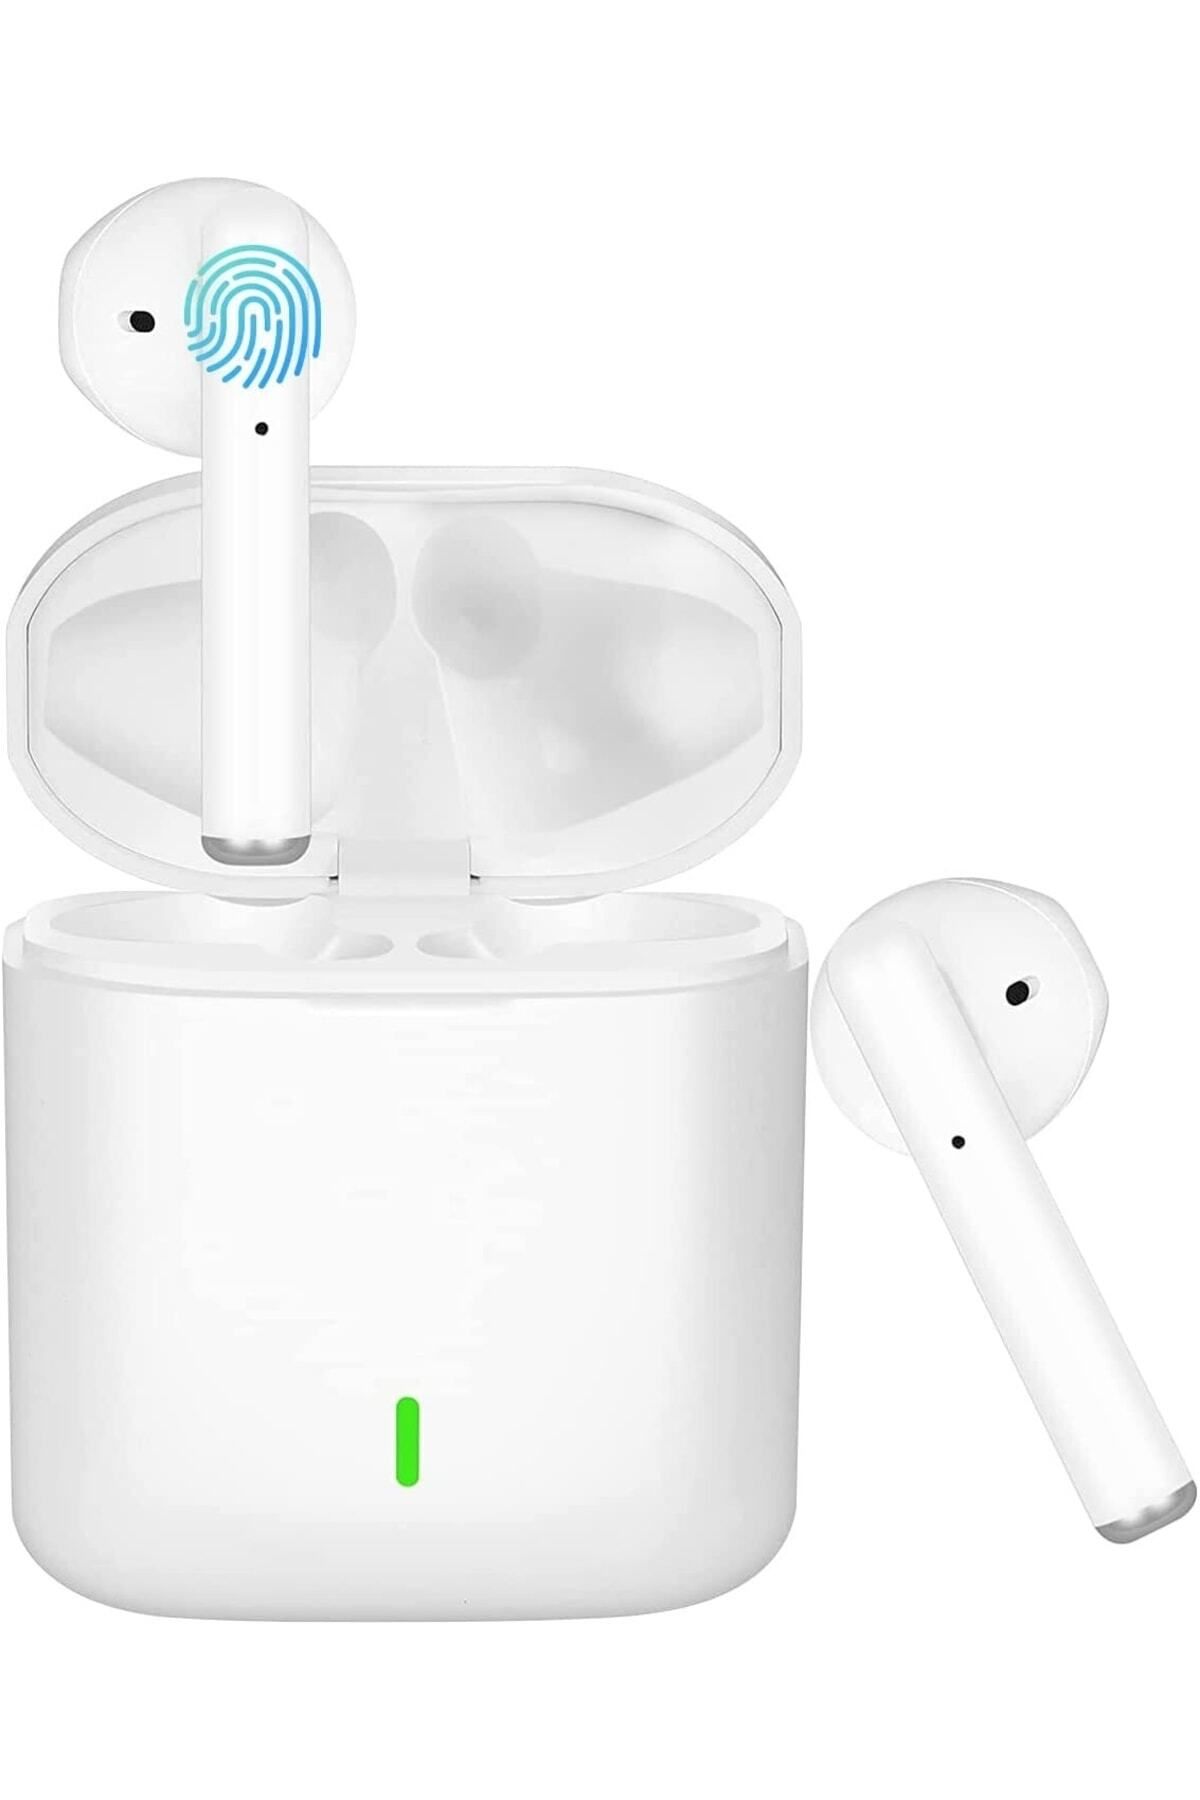 Concord Ap4 Tws Kablosuz Kulaklık - Bluetooth Kulaklık - Kulakiçi Kulaklık